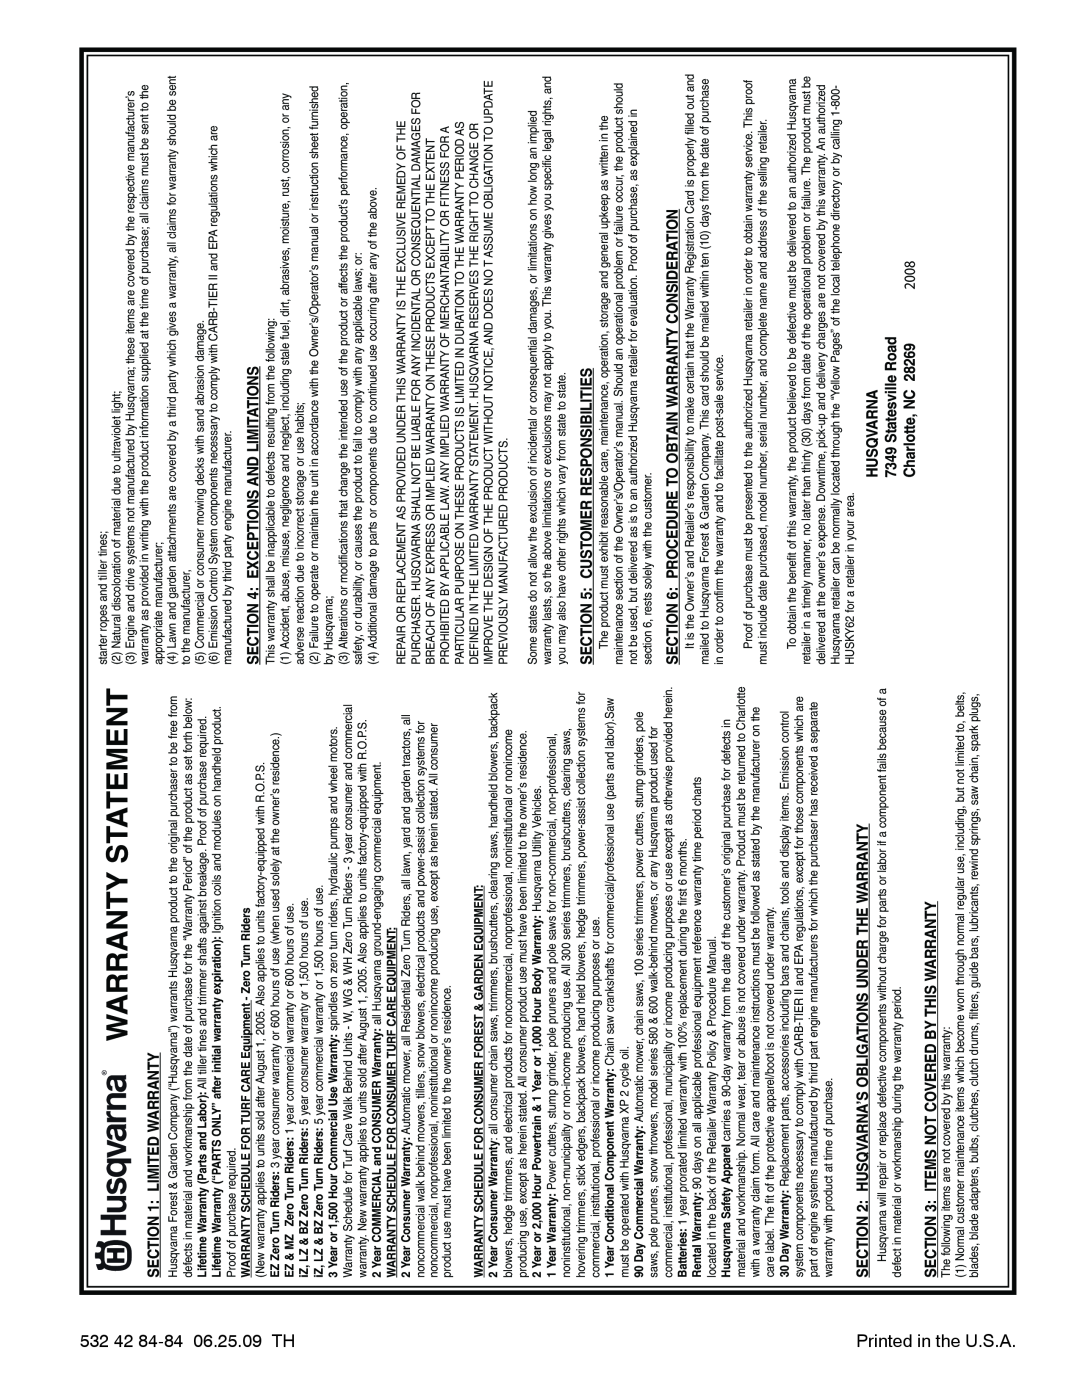 Husqvarna 924SB Warranty Statement, 2008, Charlotte, NC, WARRANTY SCHEDULE FOR TURF CARE Equipment - Zero Turn Riders 